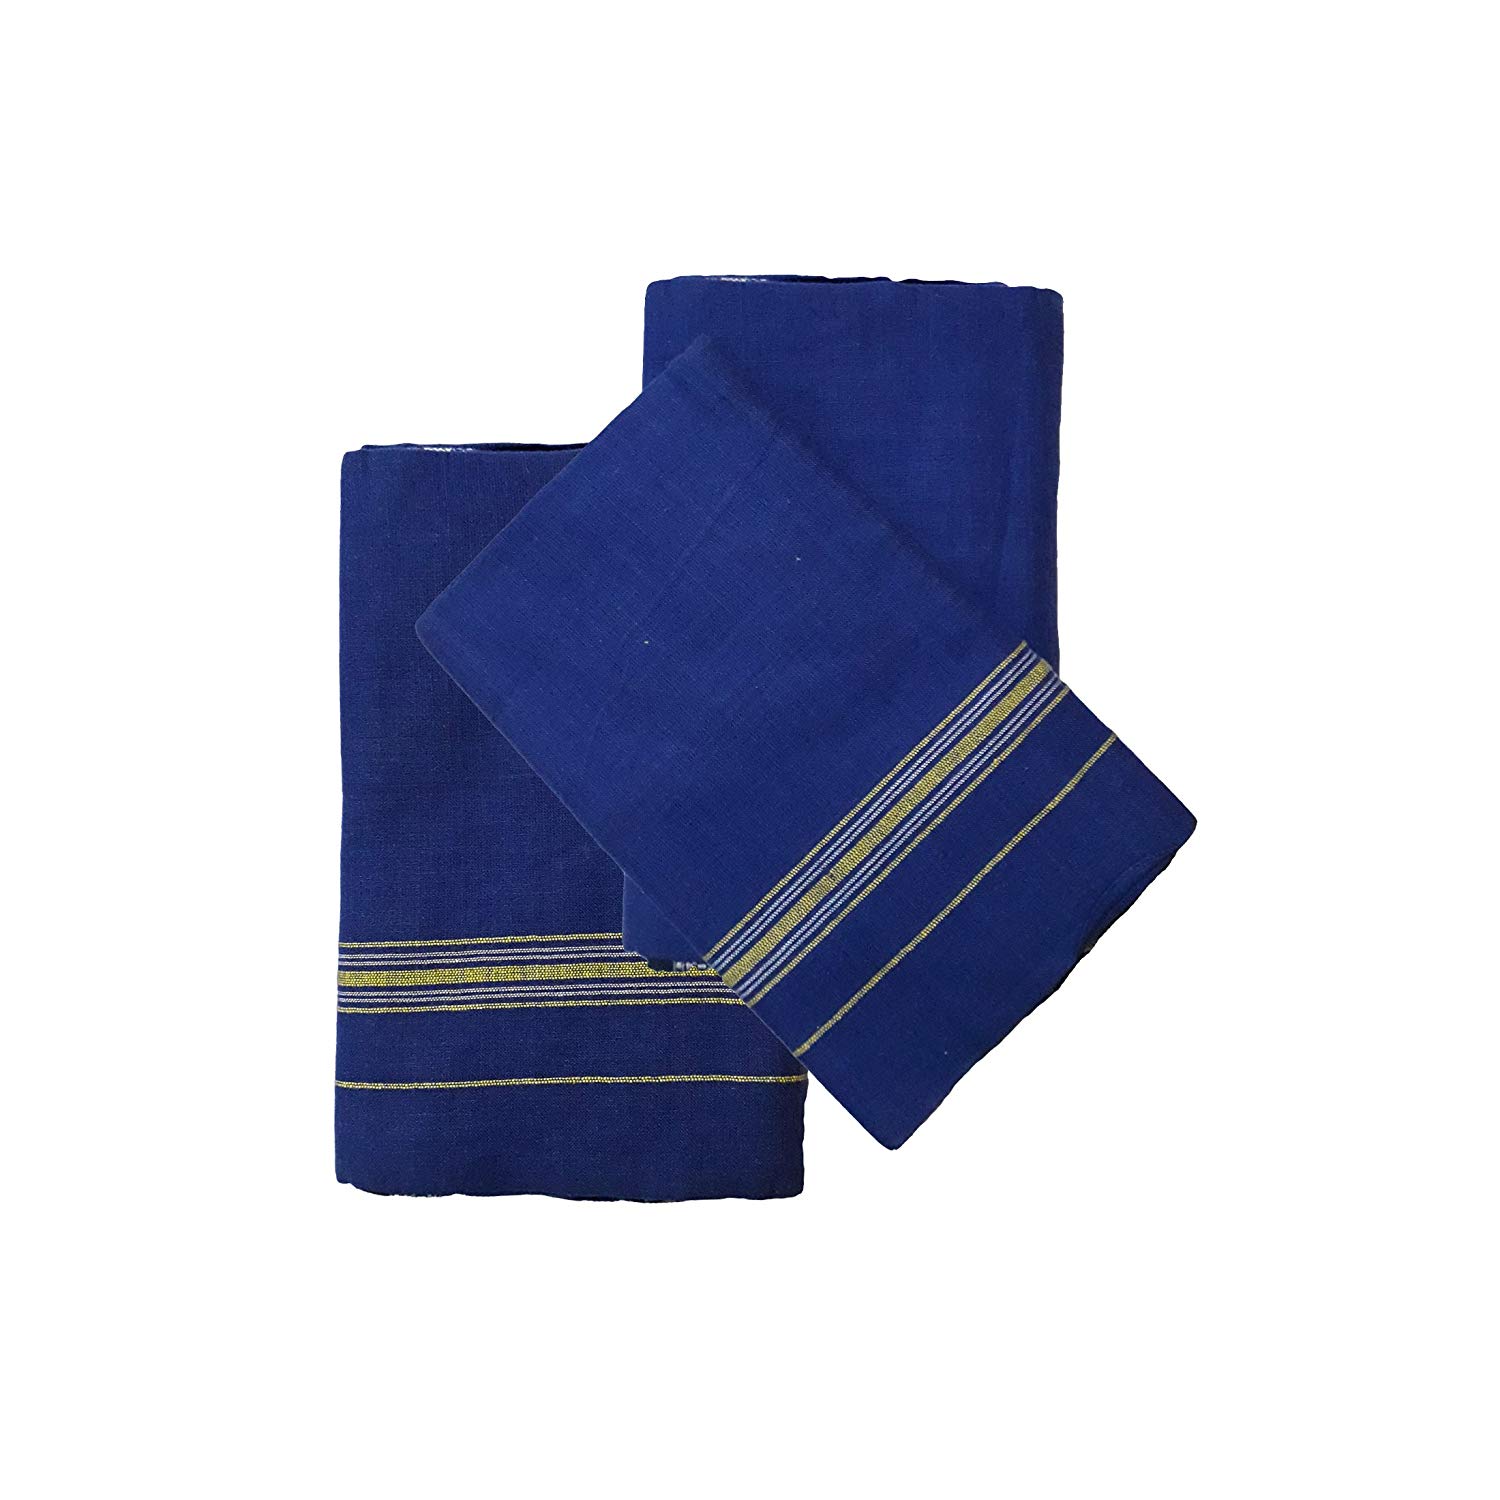 Cotton-Bath-Towel-Handloom-Large-Gamcha-Towel-Blue-Plane-Pack-of-3-B078NFNZ8B.jpg